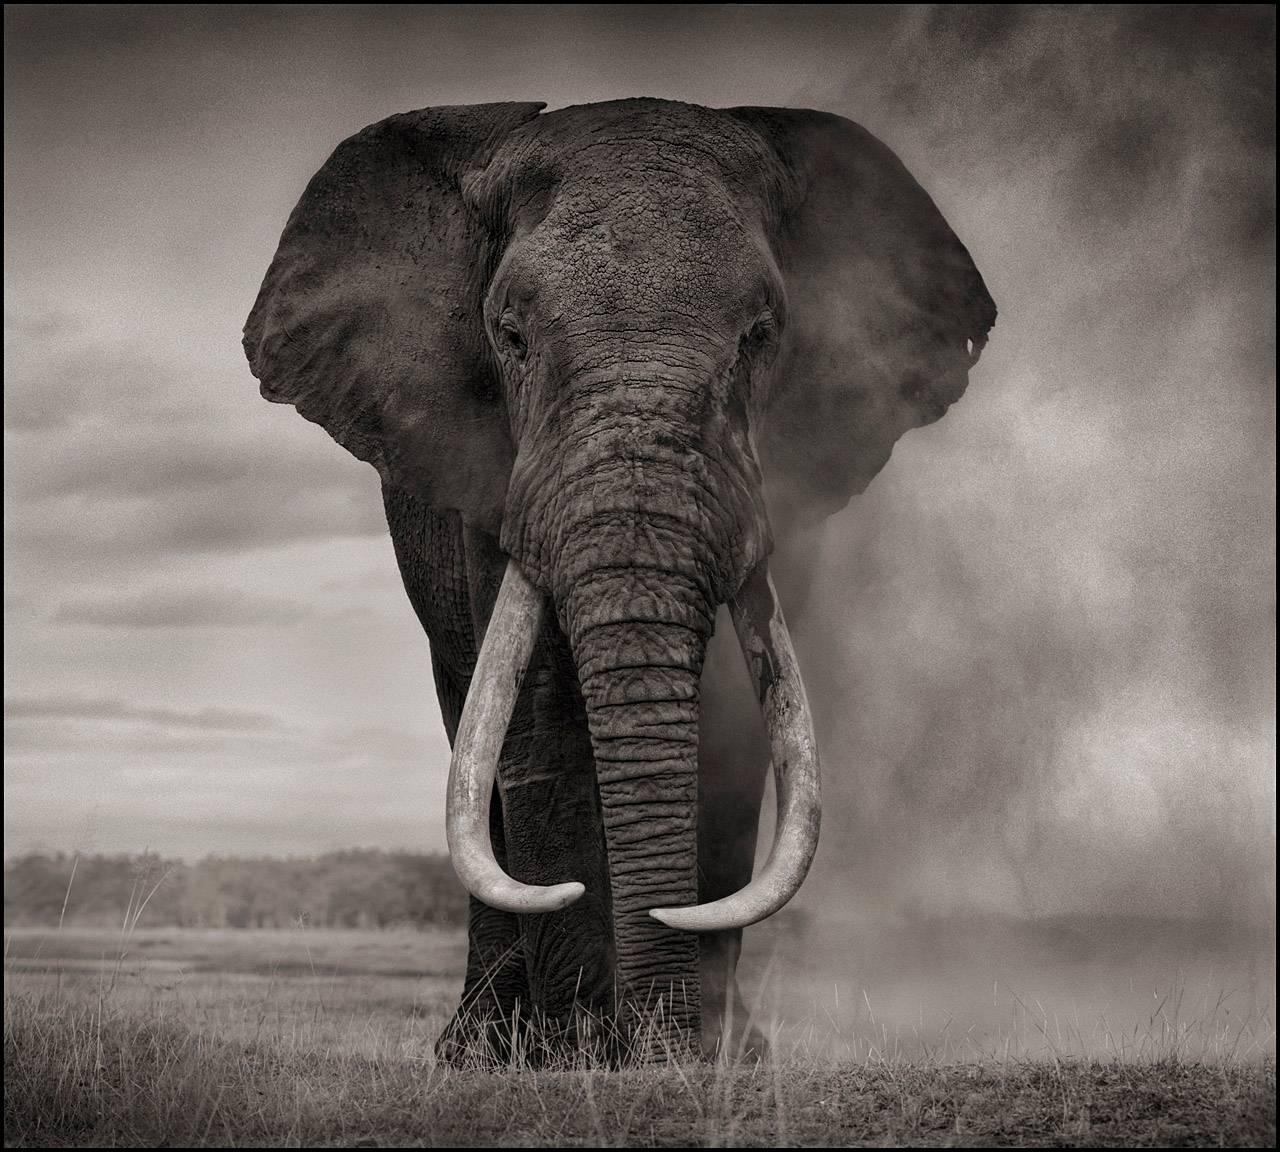 Nick Brandt Portrait Photograph - Elephant in Dust, Amboseli 